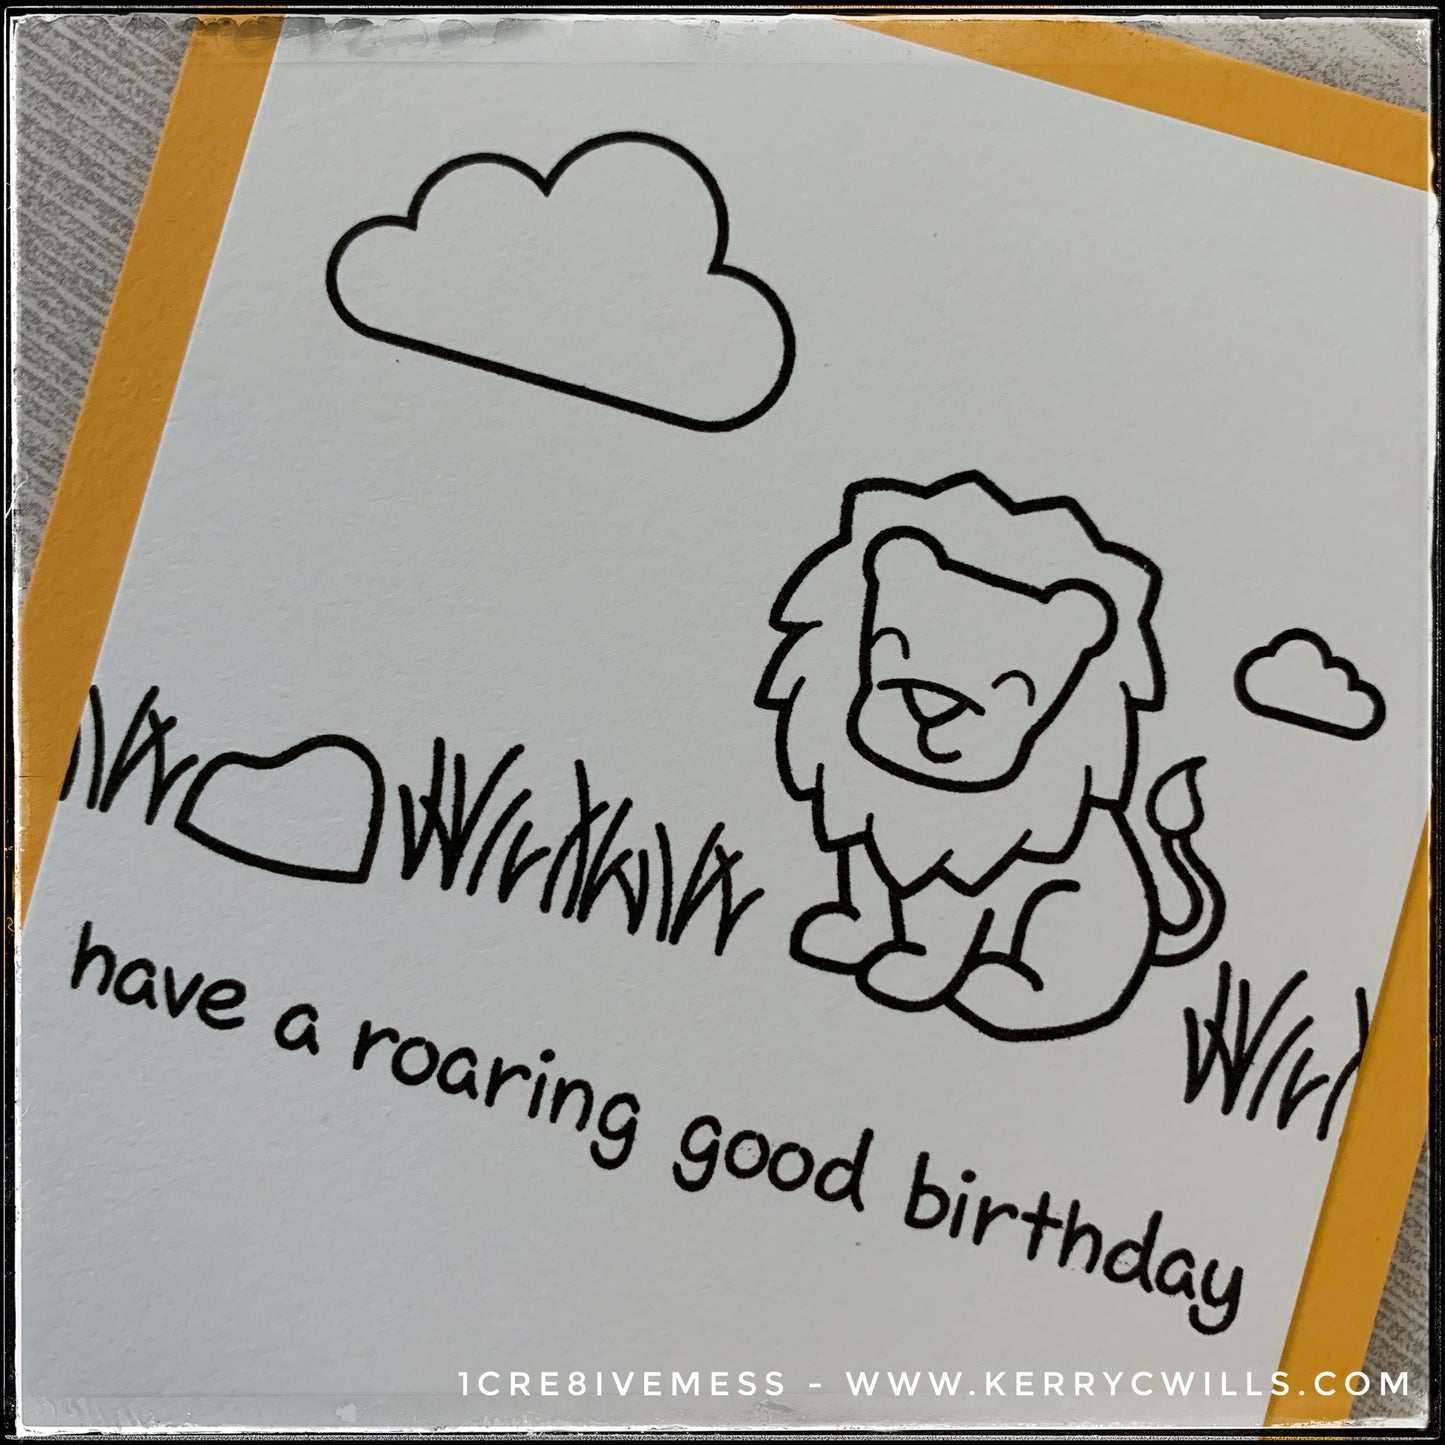 Roaring Good Birthday Handmade Card